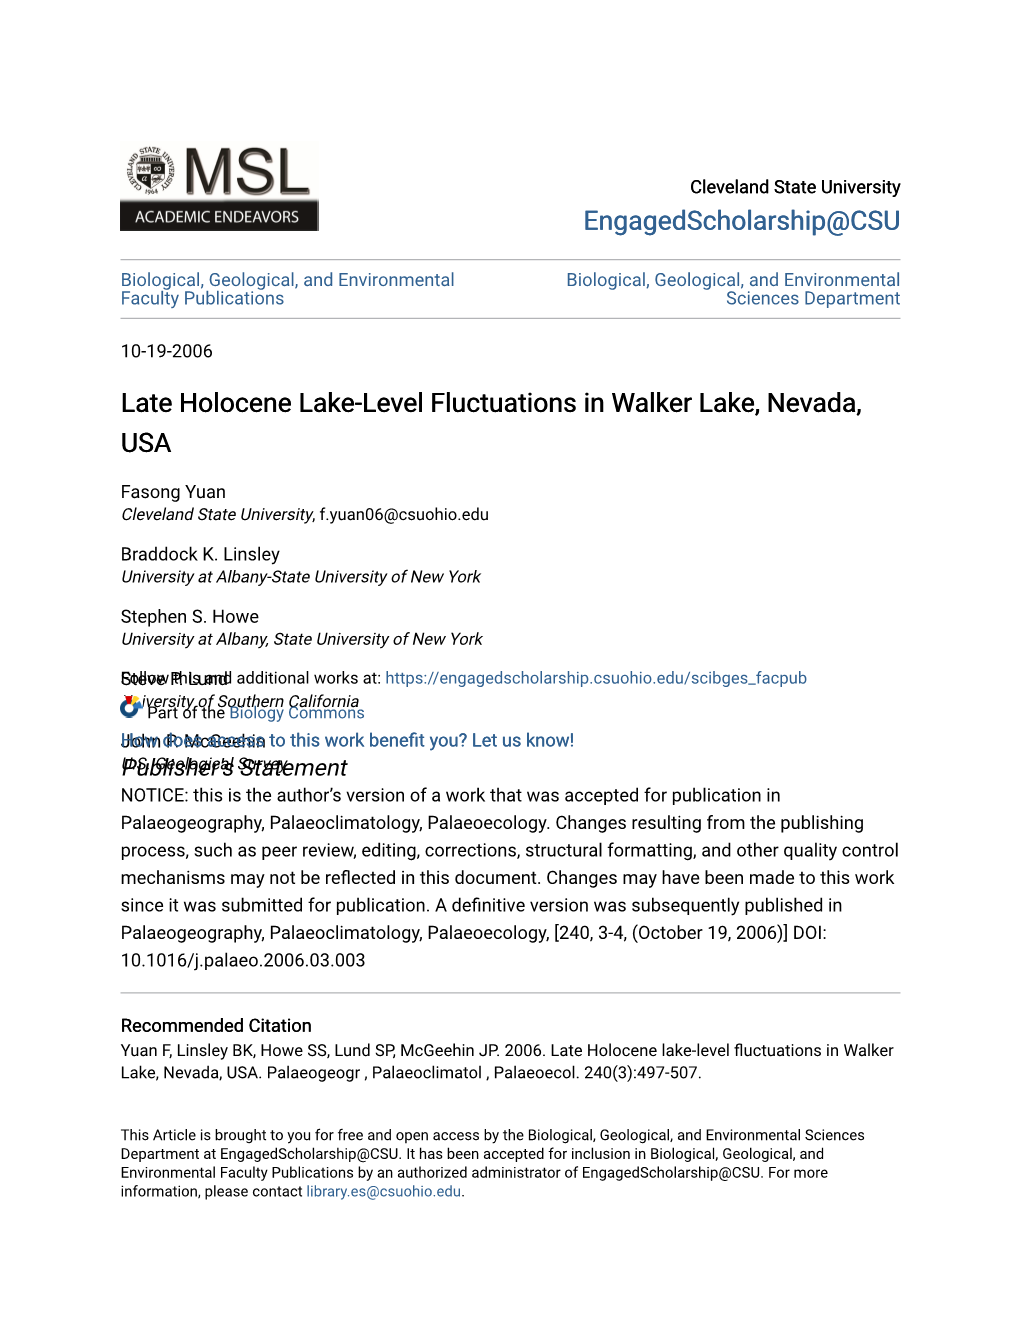 Late Holocene Lake-Level Fluctuations in Walker Lake, Nevada, USA